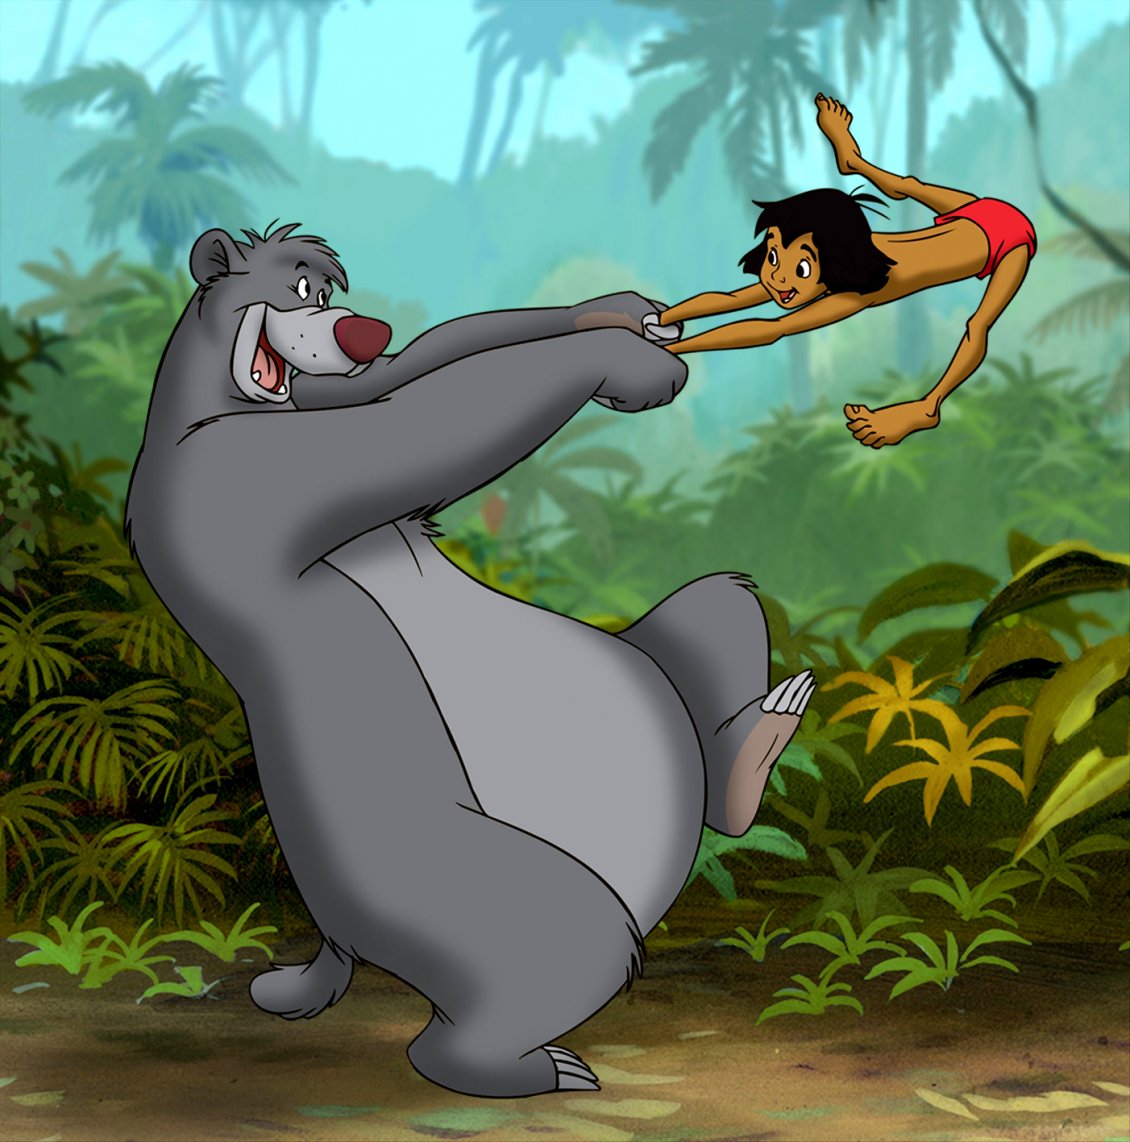 Download Wallpaper Jungle book - Mowgli and baloo characters